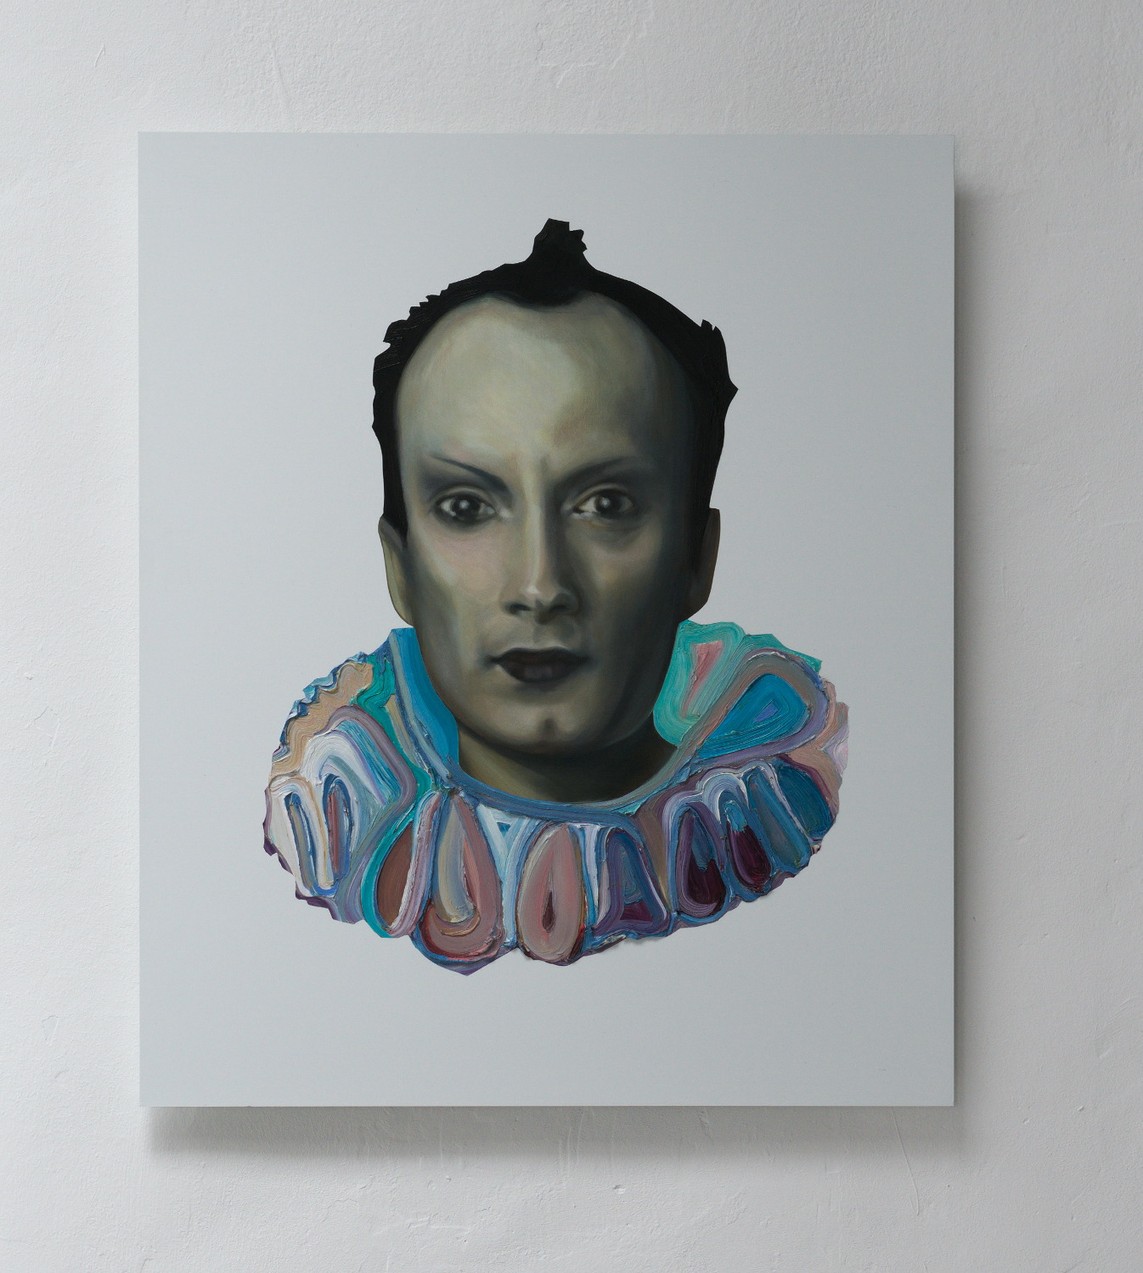 Elisabeth Bereznicki – Klaus Nomi / Öl auf Alu-Dibond, 60 x 50 cm, 2014